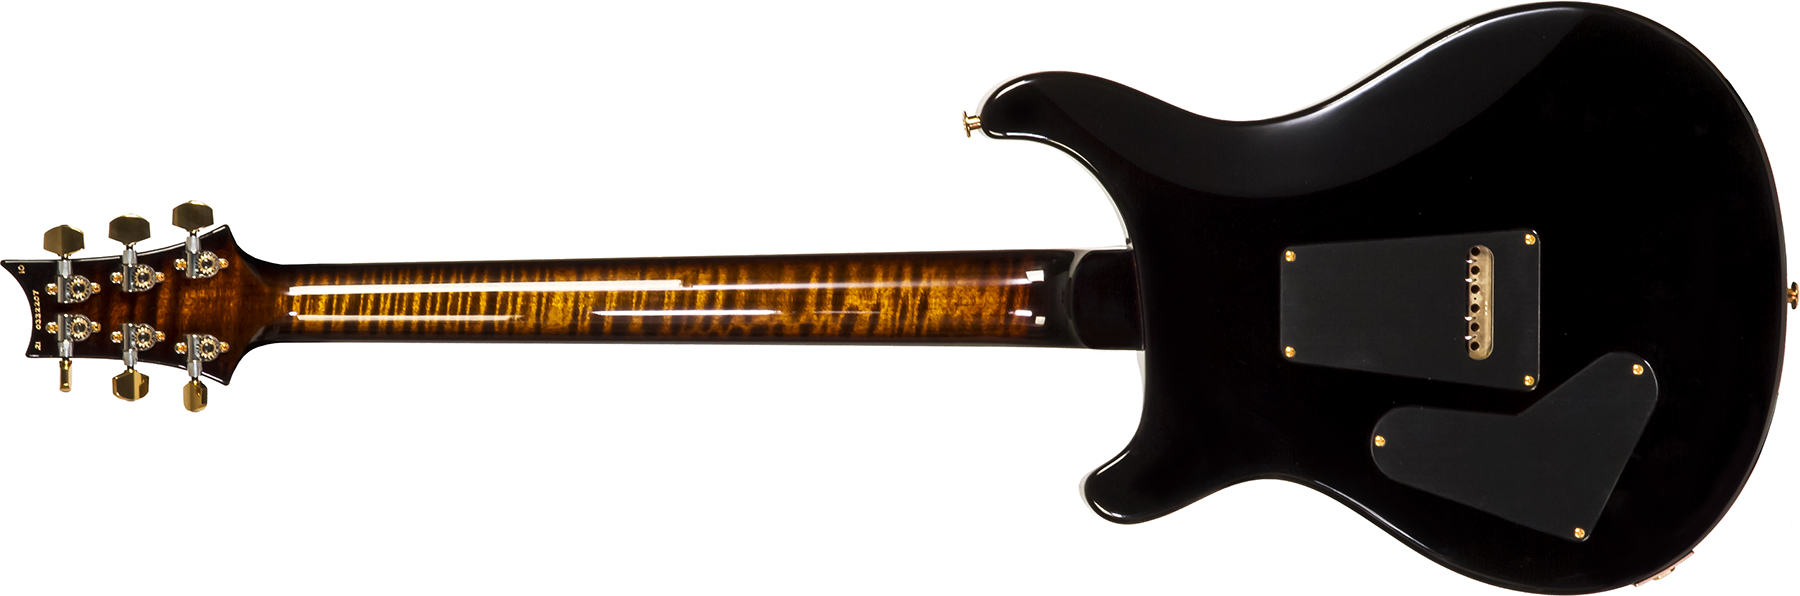 Prs Custom 24 10 Top Usa 2h Trem Rw #21-0332207 - Black Gold Burst - Double cut electric guitar - Variation 1